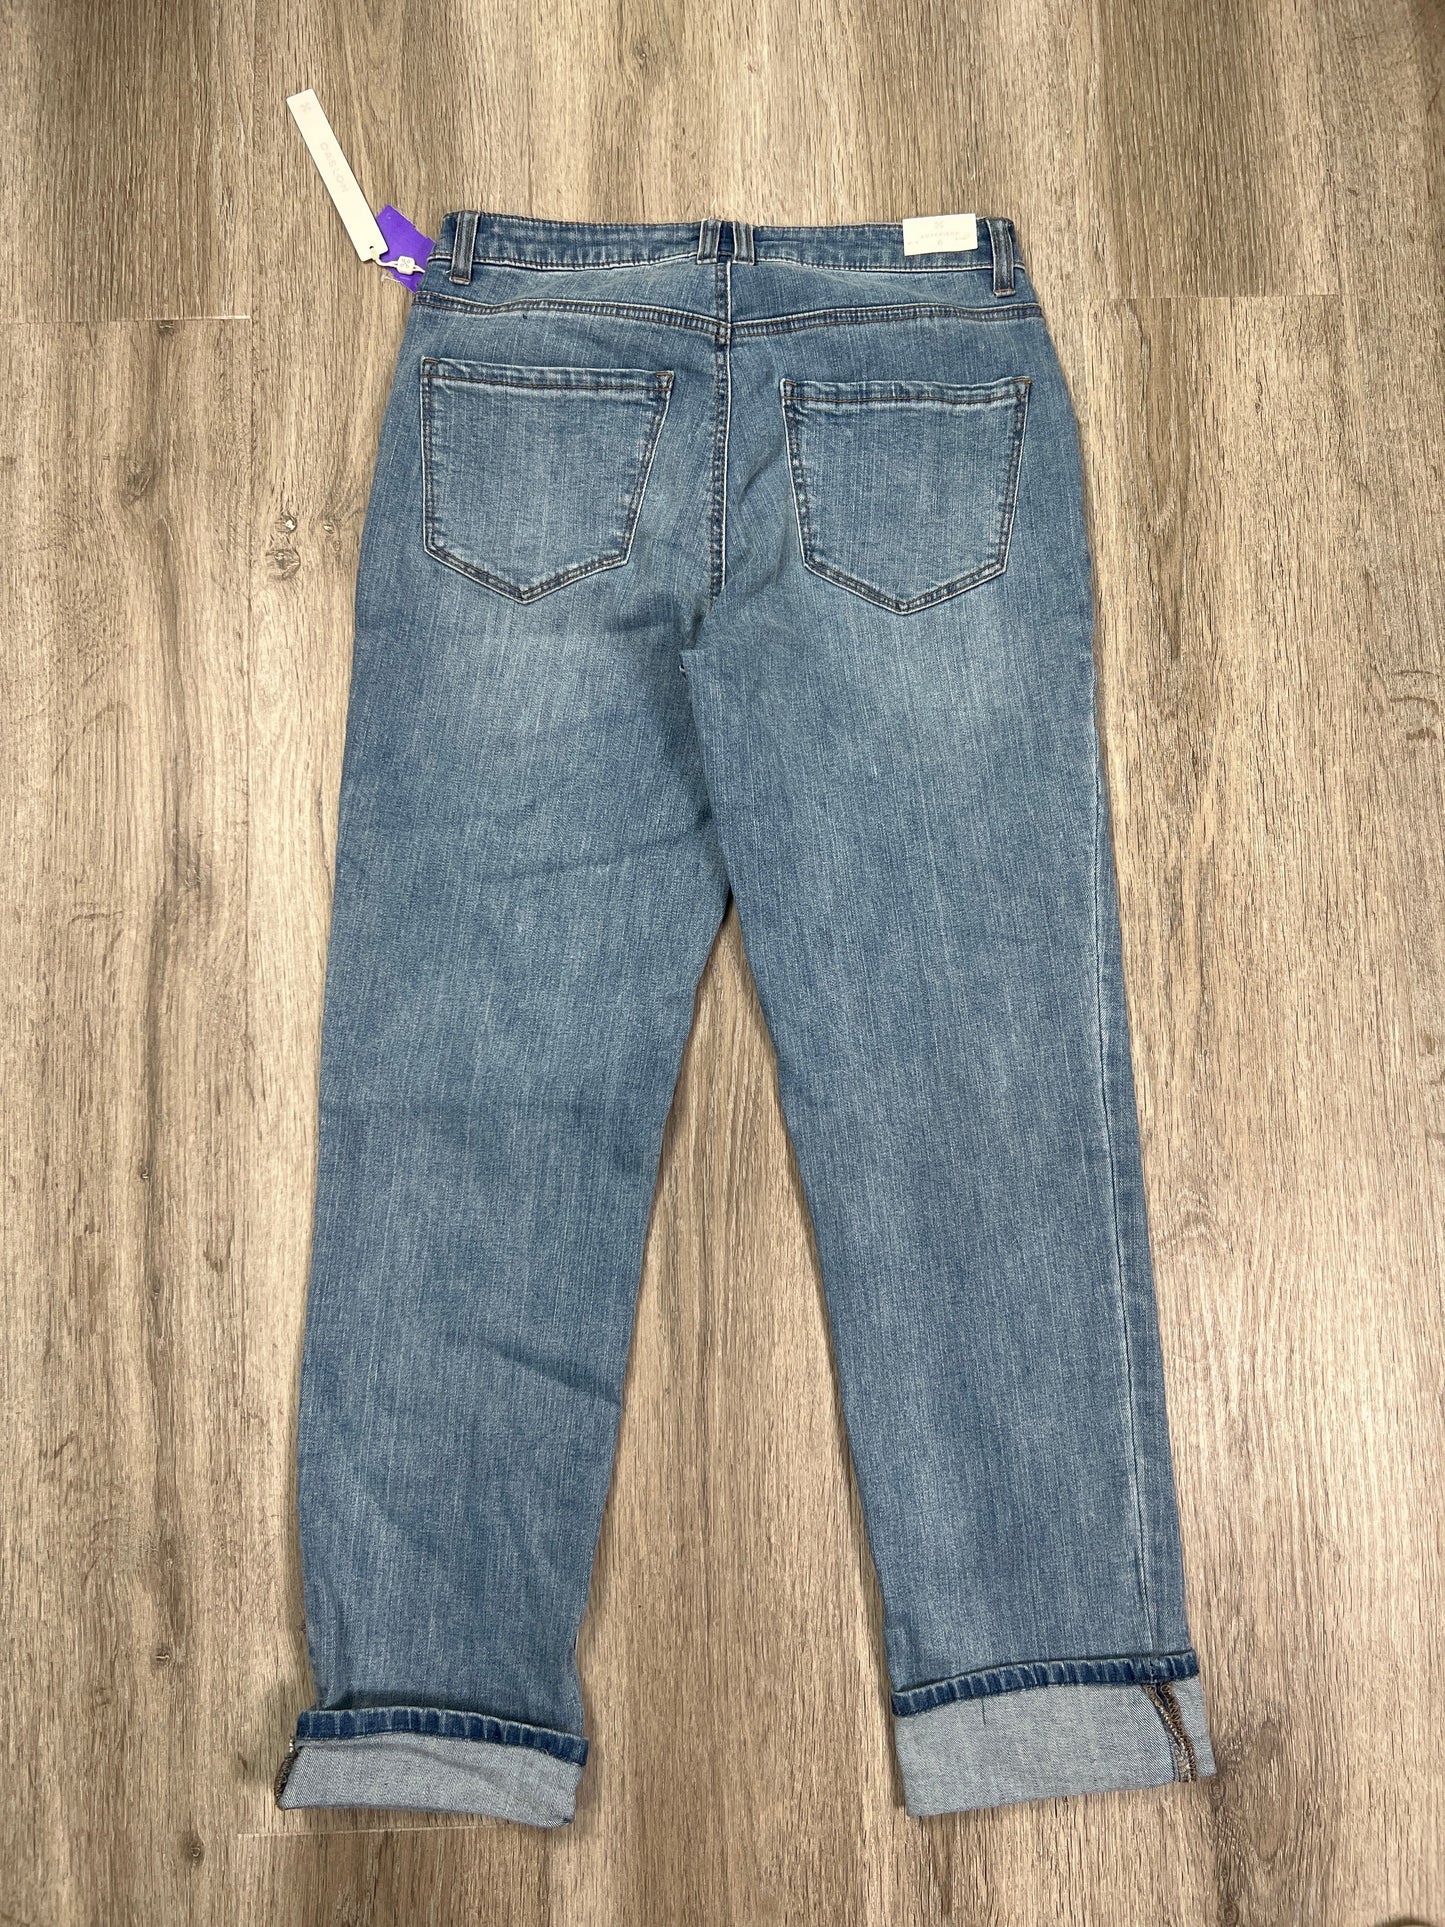 Jeans Boyfriend By Caslon  Size: 6